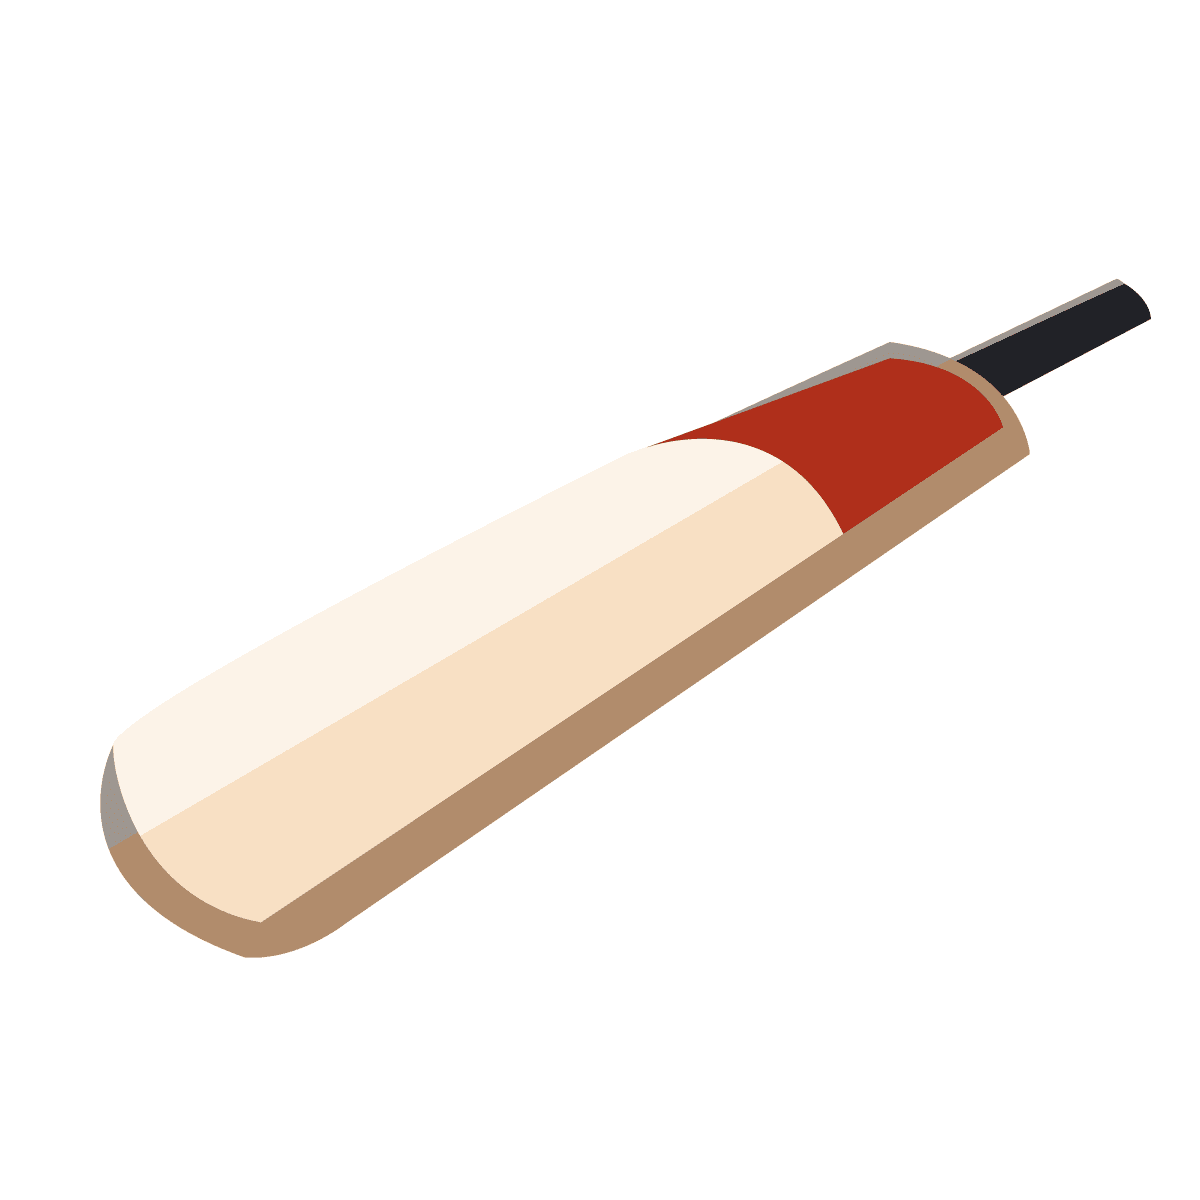 Pngtree—sports-equipment-ball-sports-cricket_6024960